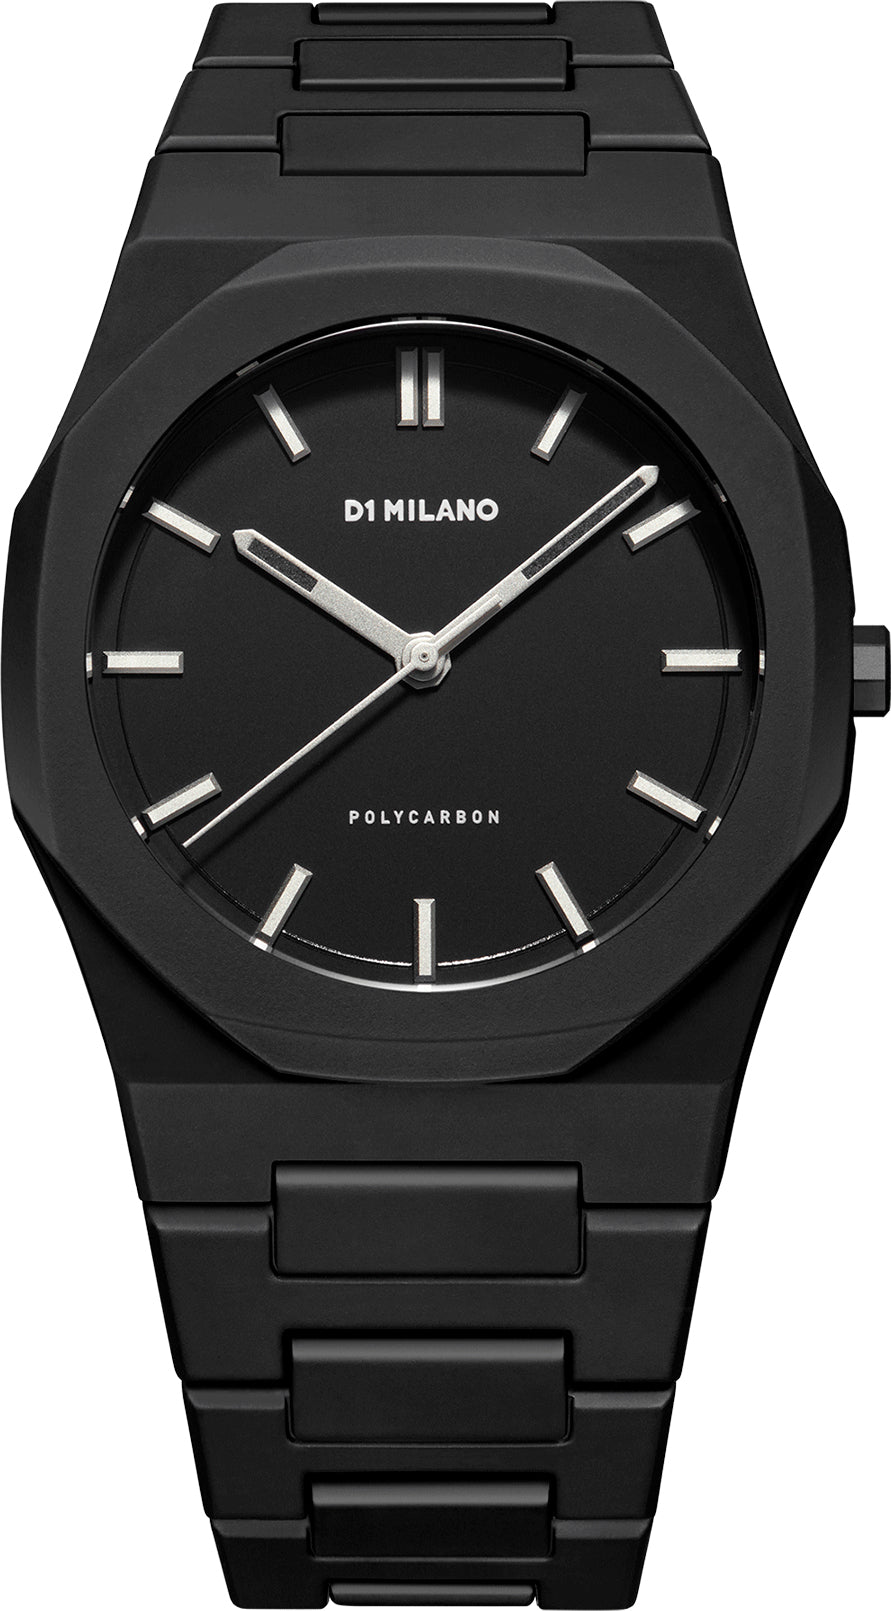 Photos - Wrist Watch Milano D1  Watch Polycarbon - Black DLM-024 